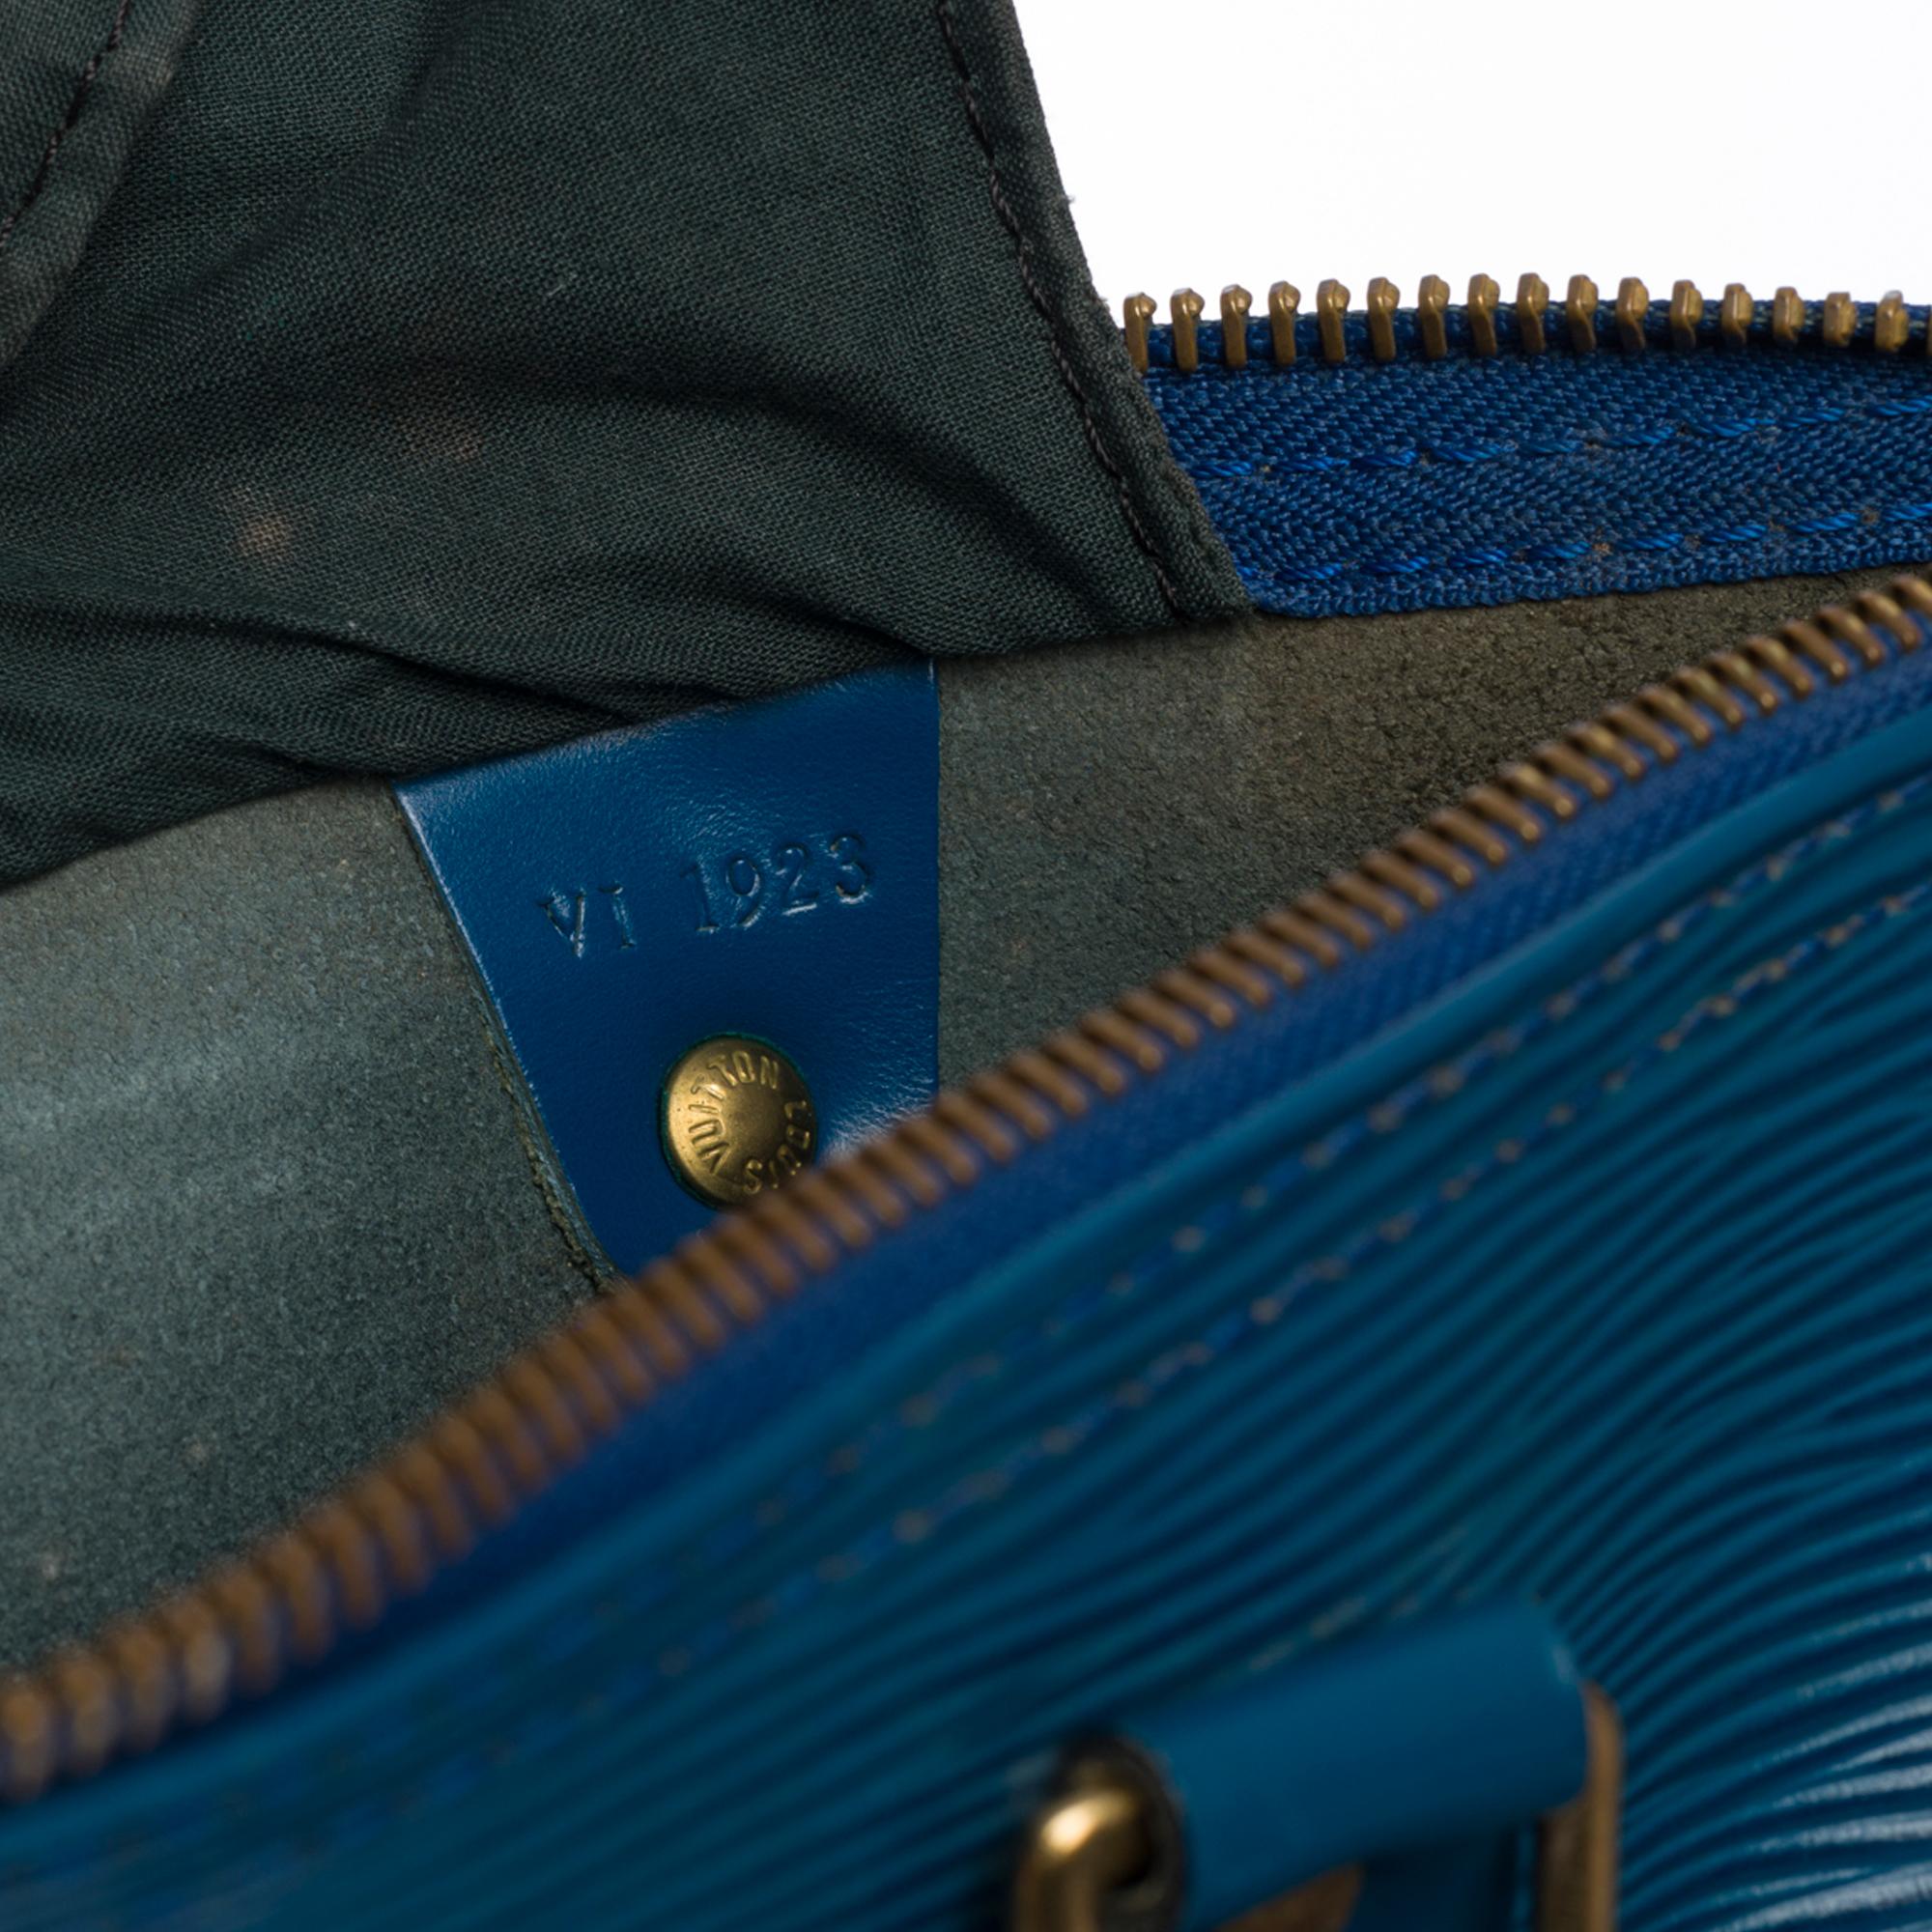 Blue Louis Vuitton Speedy 30 handbag in blue cobalt épi leather and gold hardware